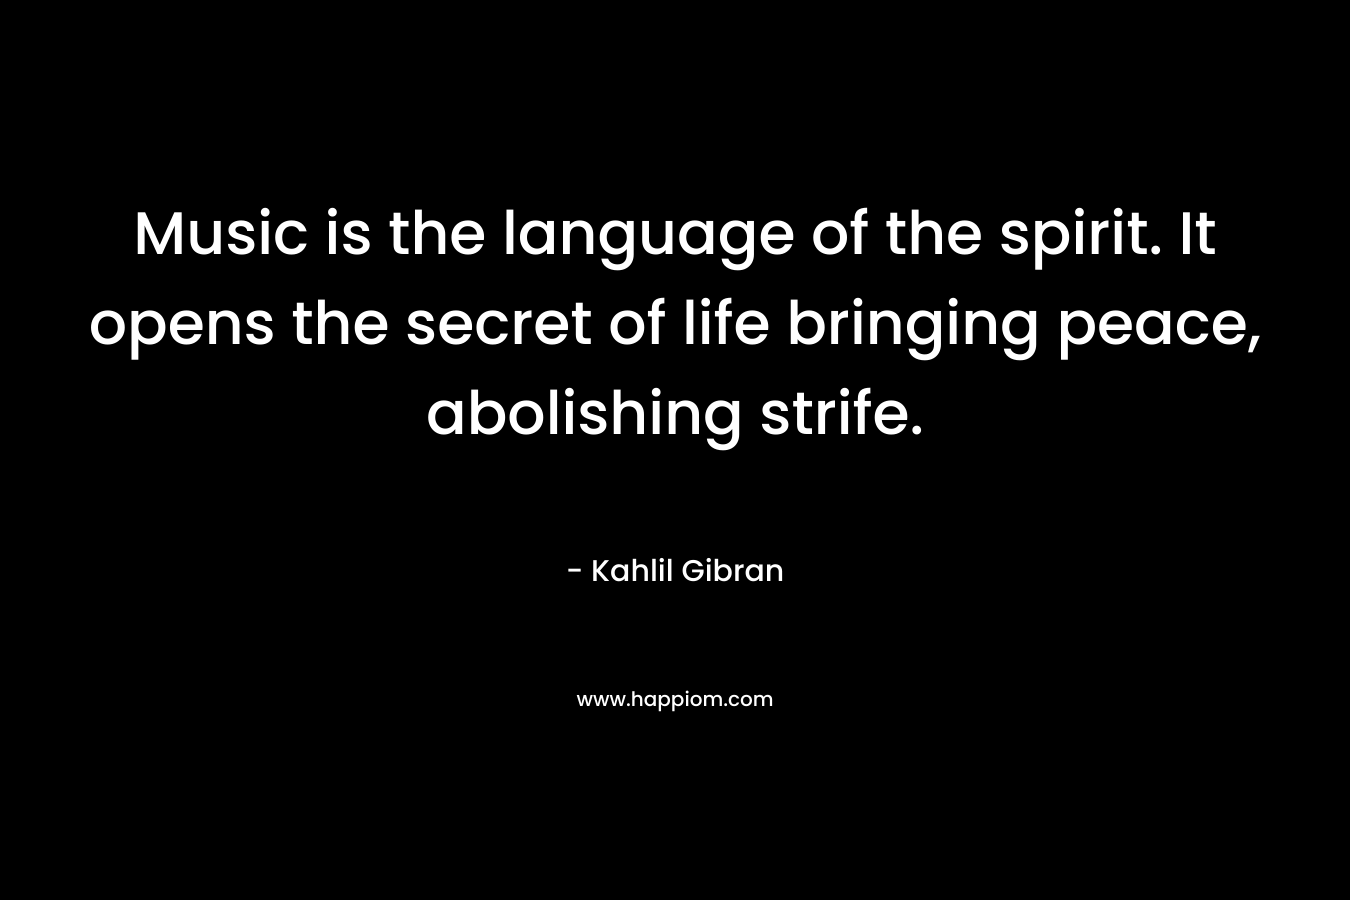 Music is the language of the spirit. It opens the secret of life bringing peace, abolishing strife. – Kahlil Gibran